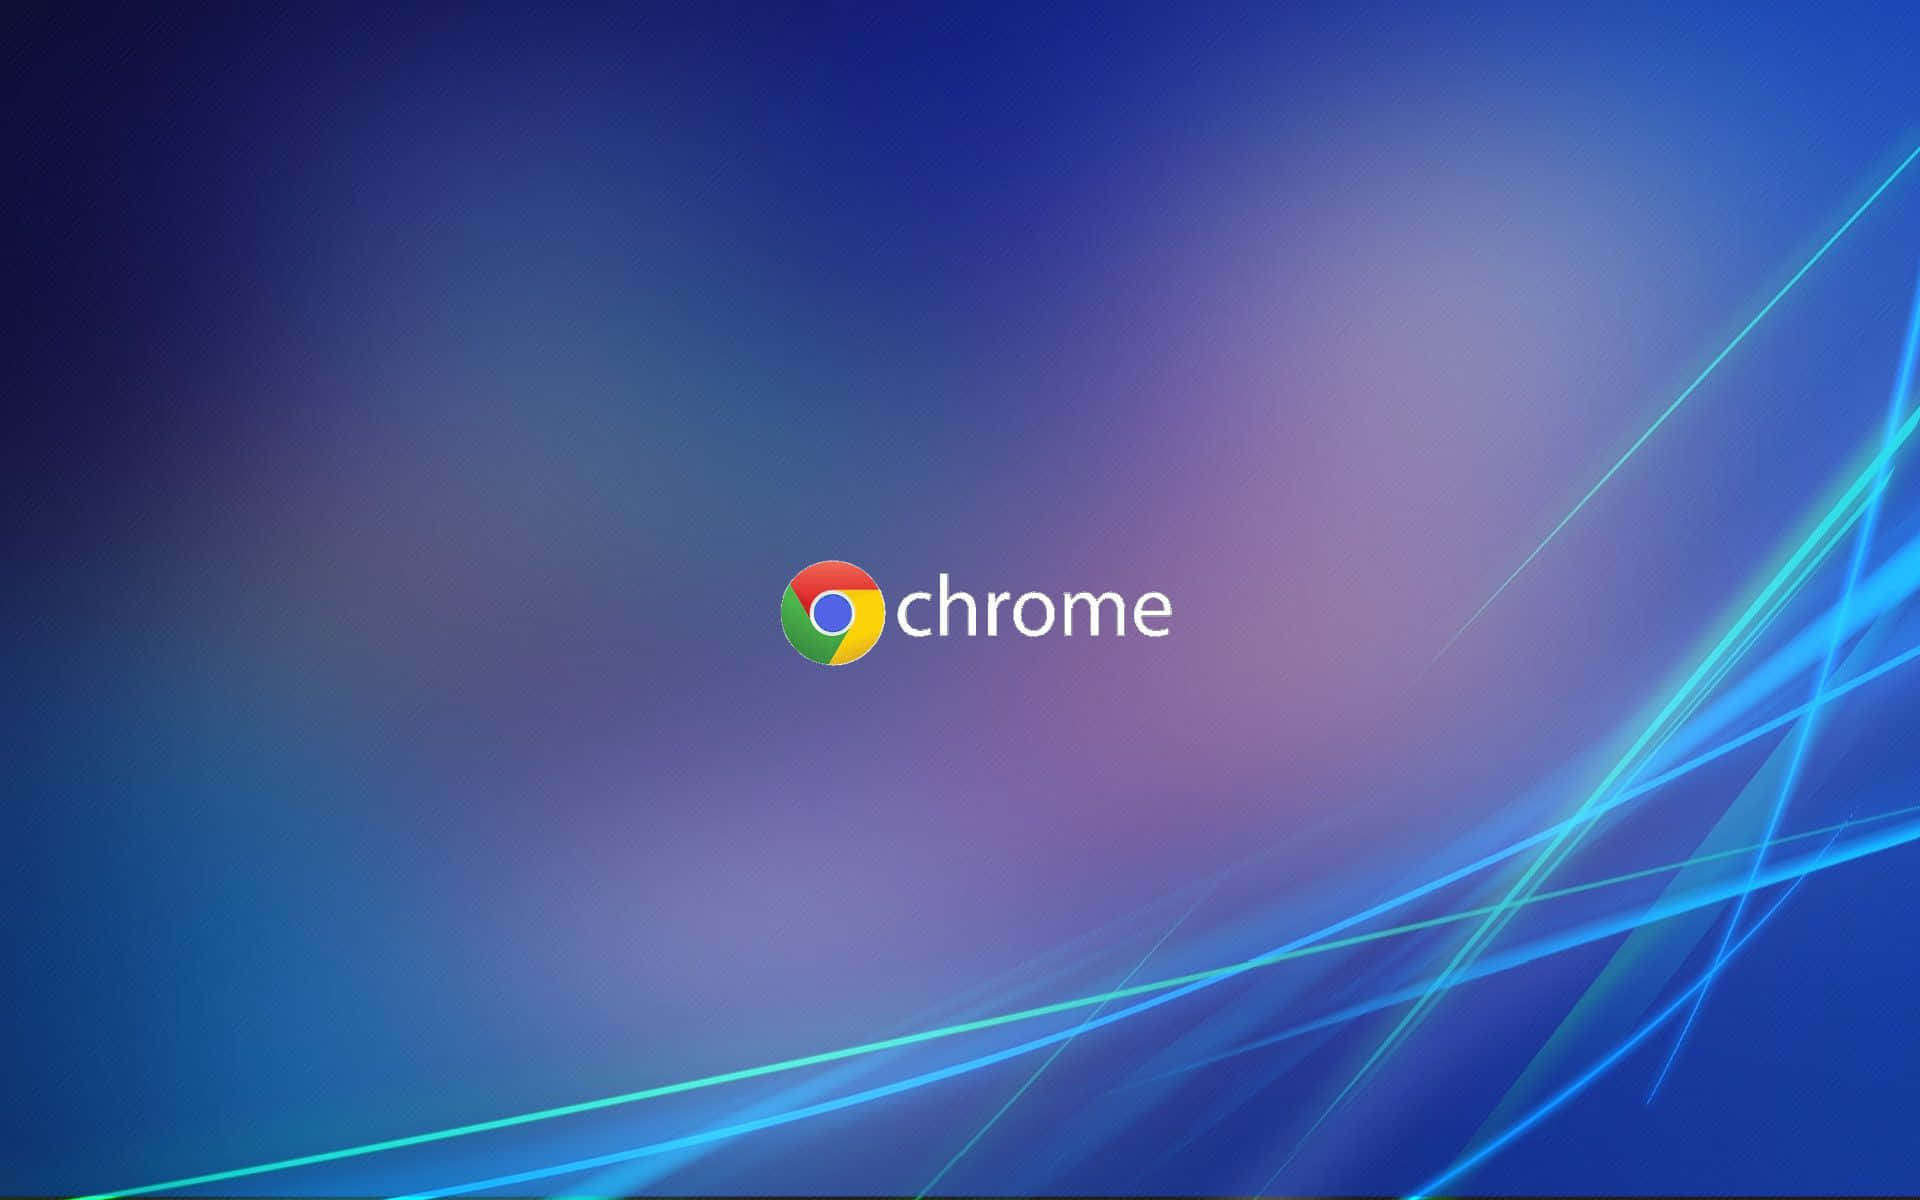 Chrome Logo On A Blue Background